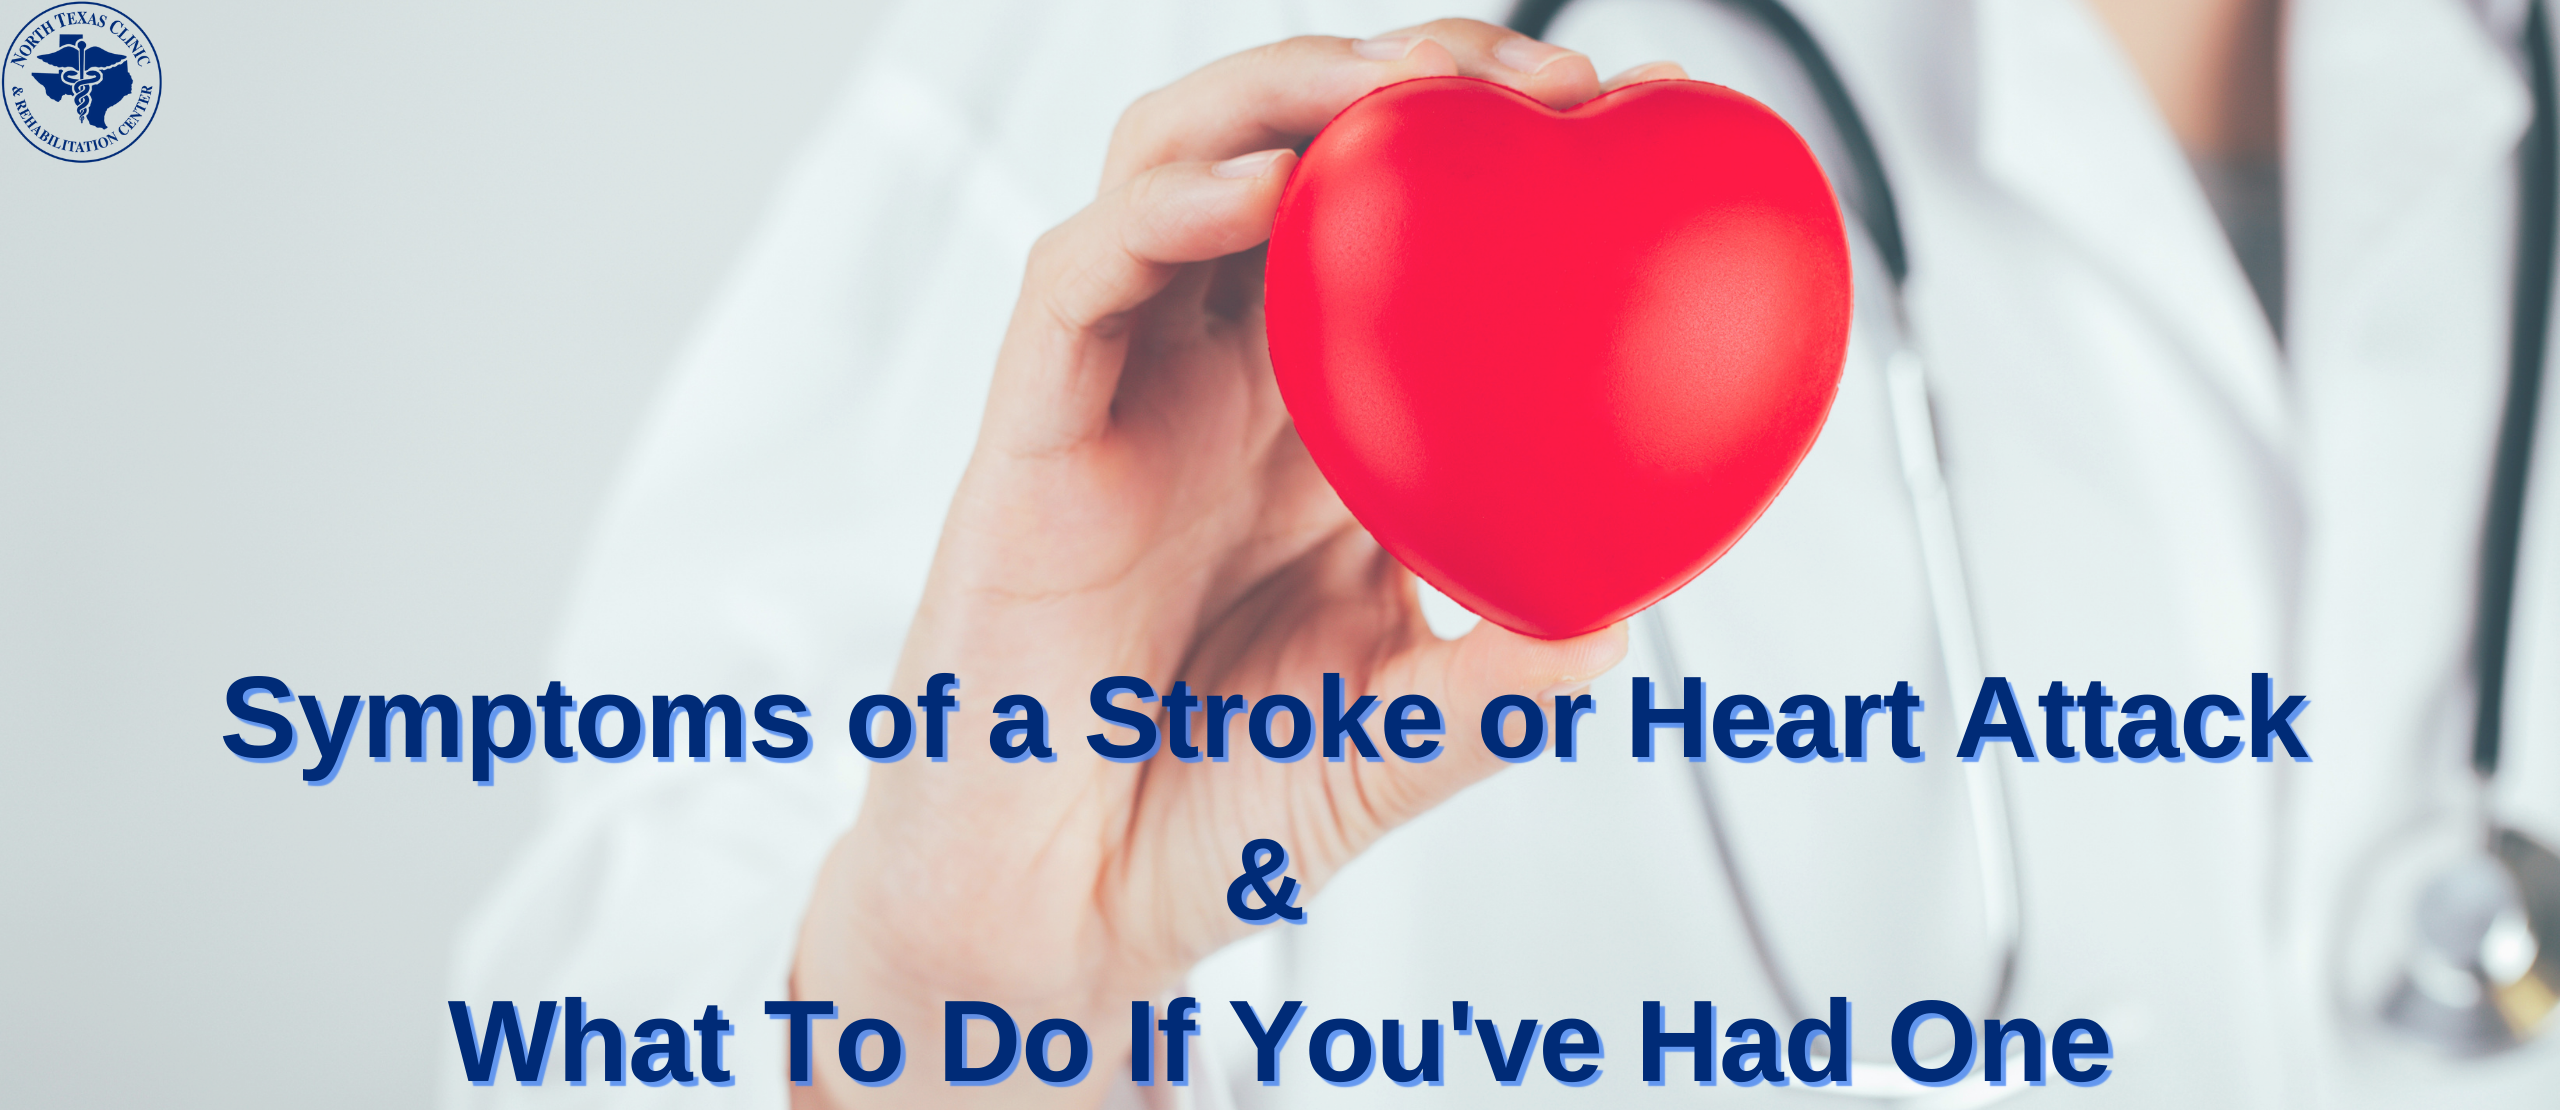 symptoms of a stroke or heart attack header